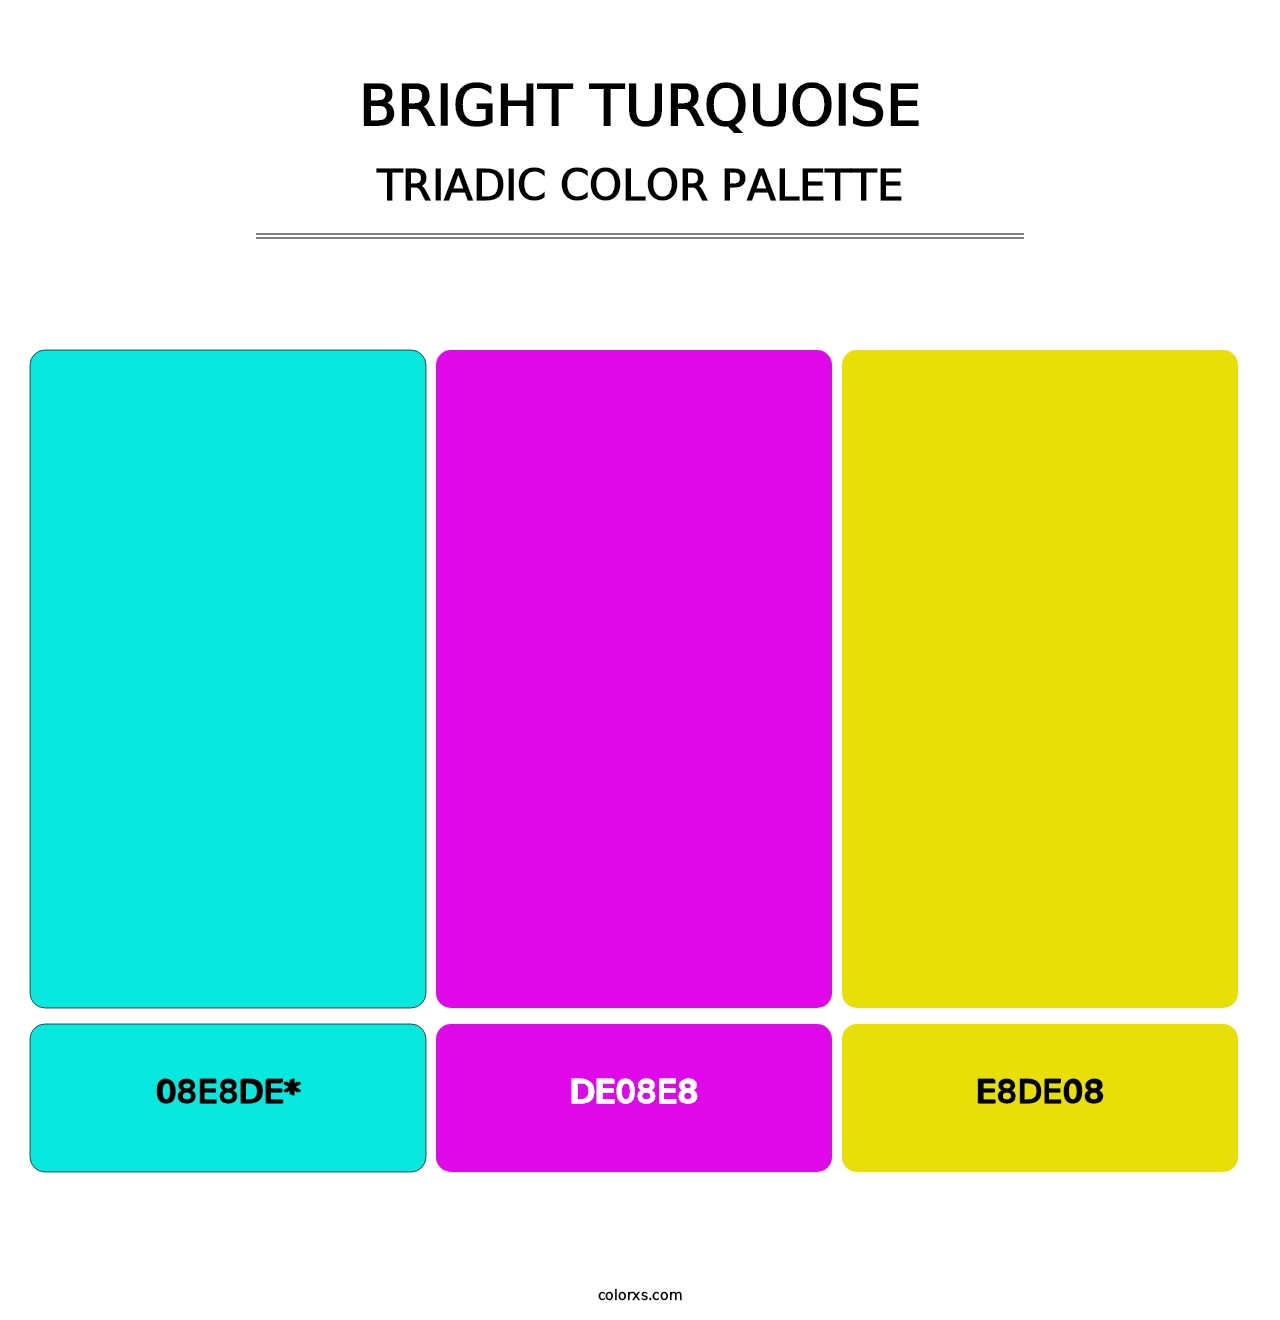 Bright Turquoise - Triadic Color Palette